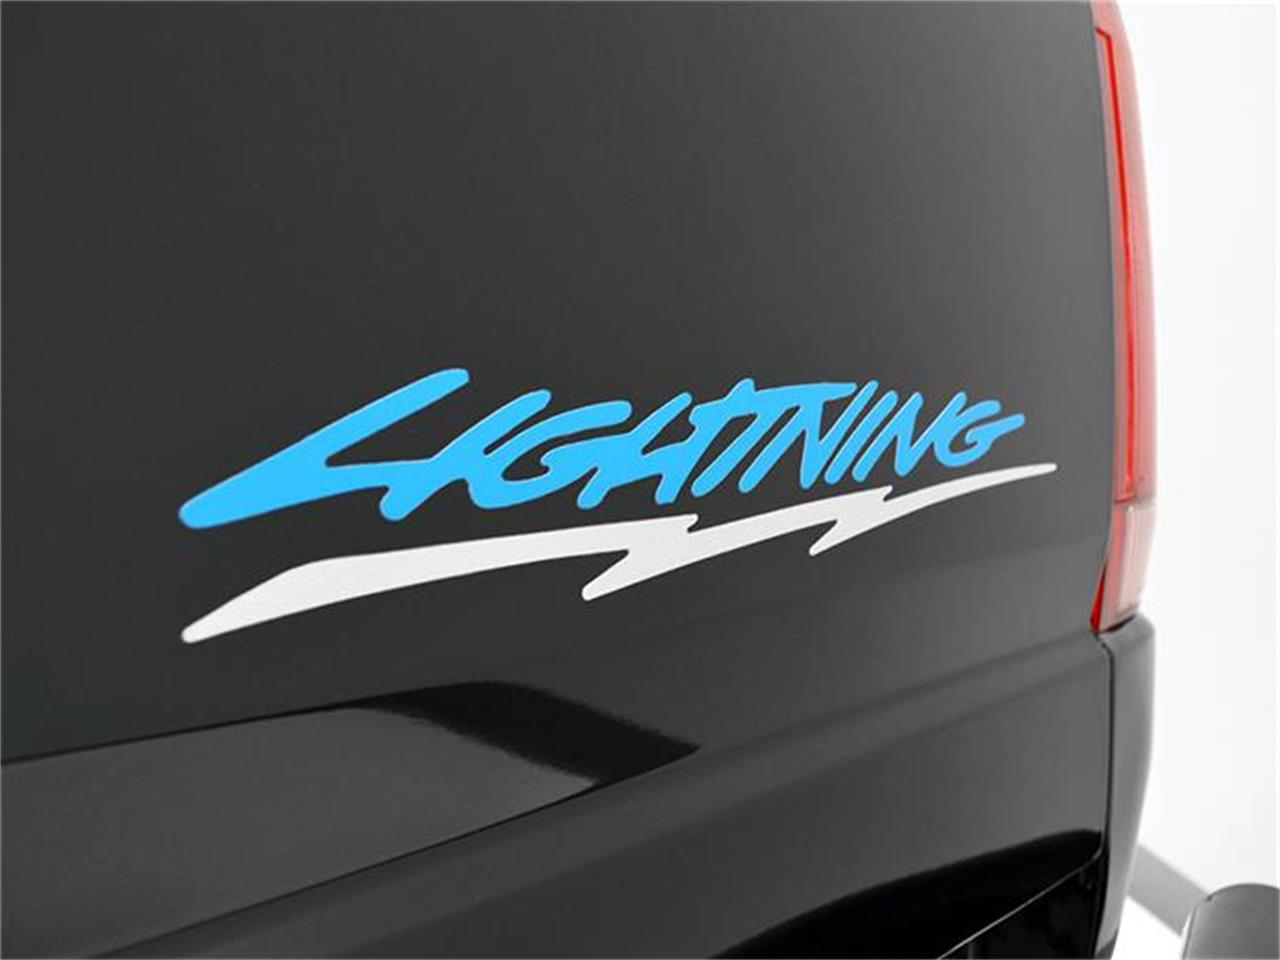 1994 ford lightning price